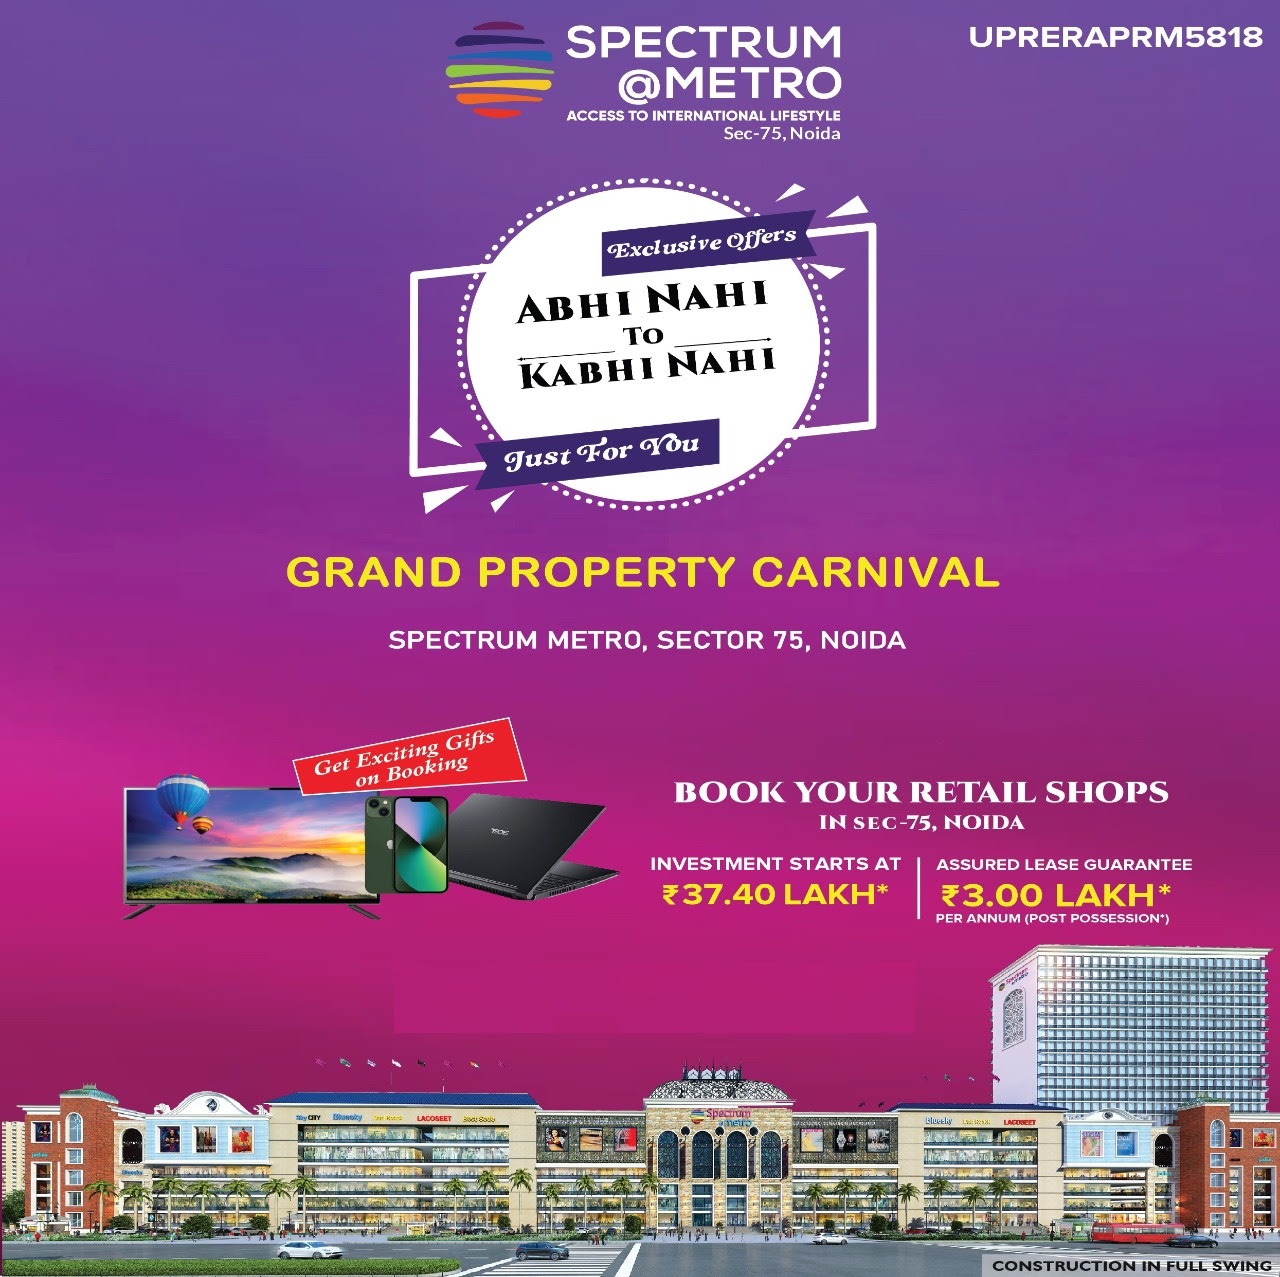 Grand property carnival at Spectrum Metro in Sector 75, Noida Update